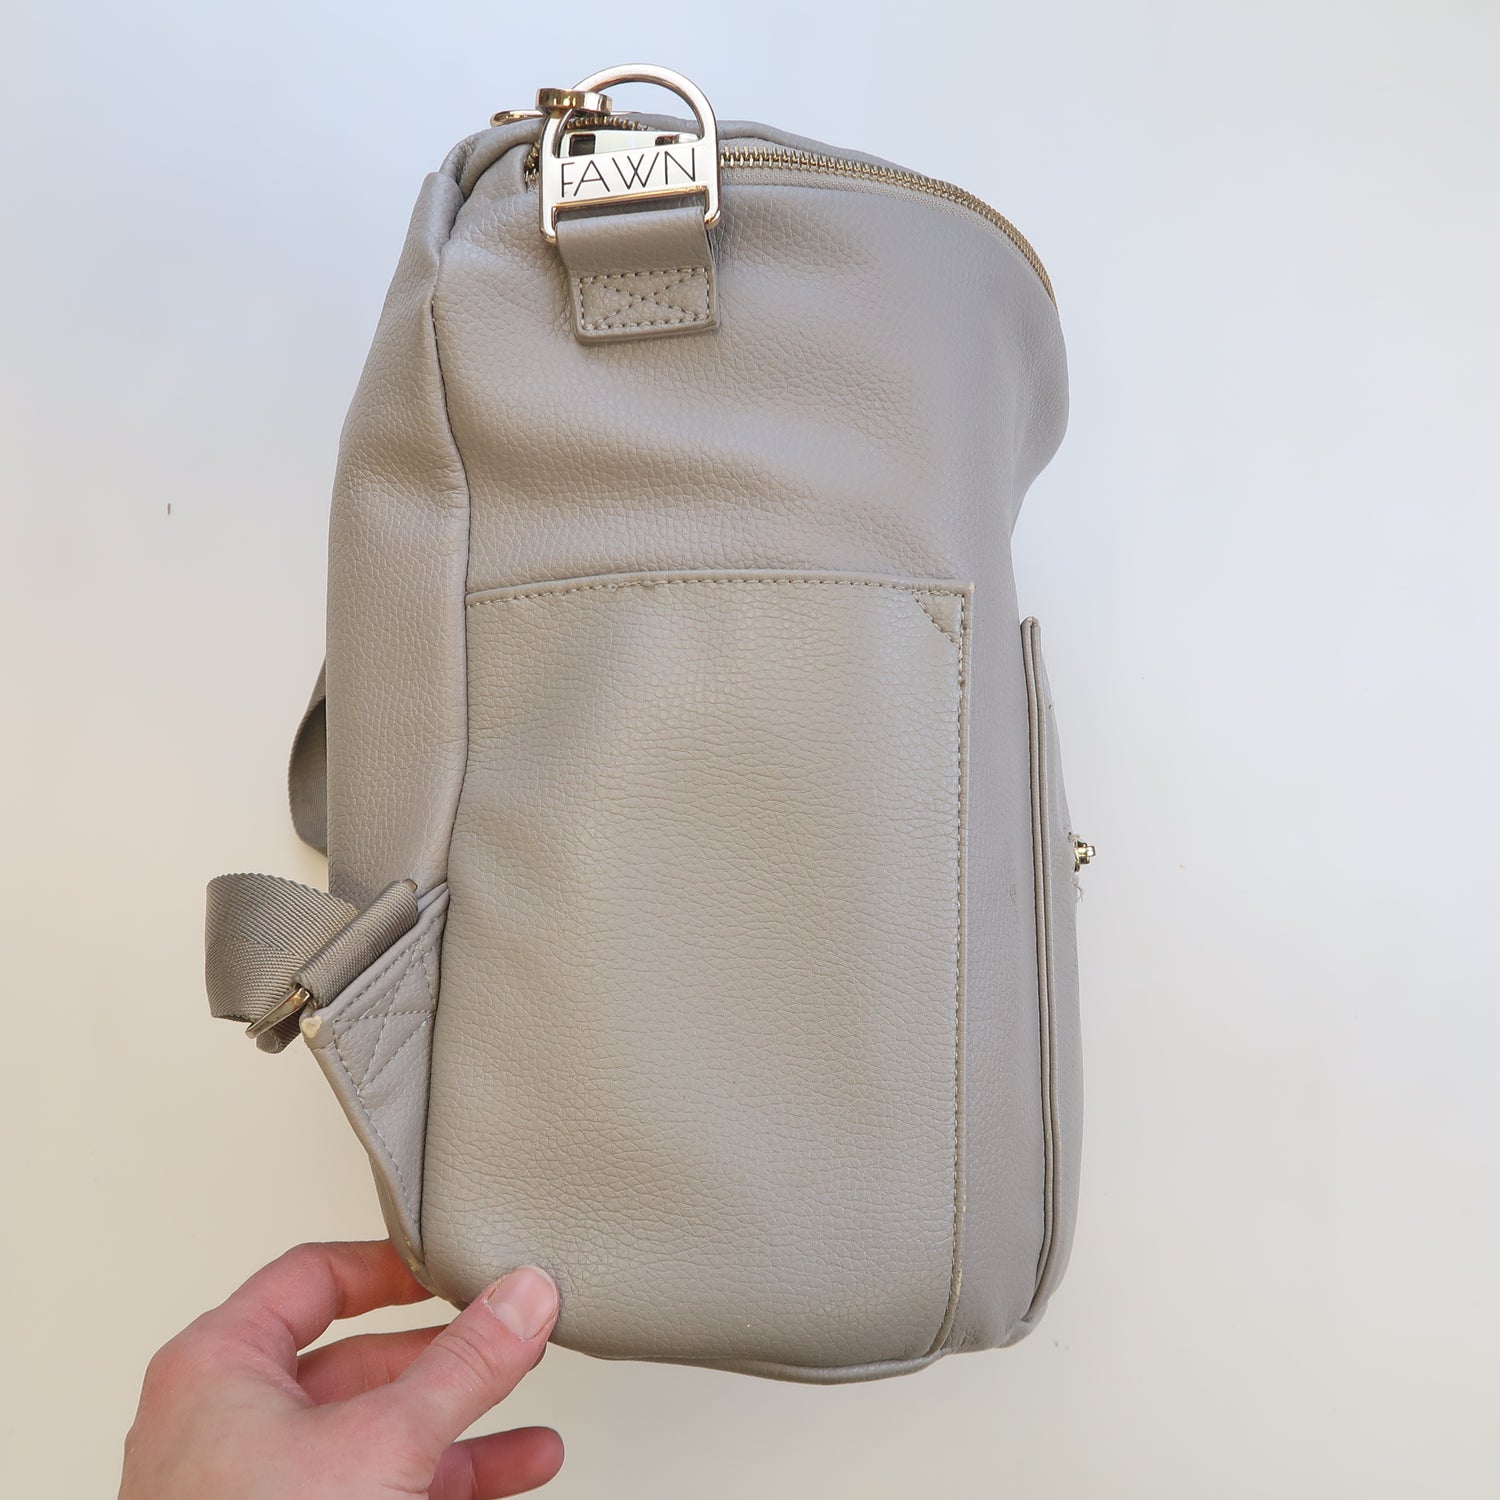 Fawn Design - Diaper Bag